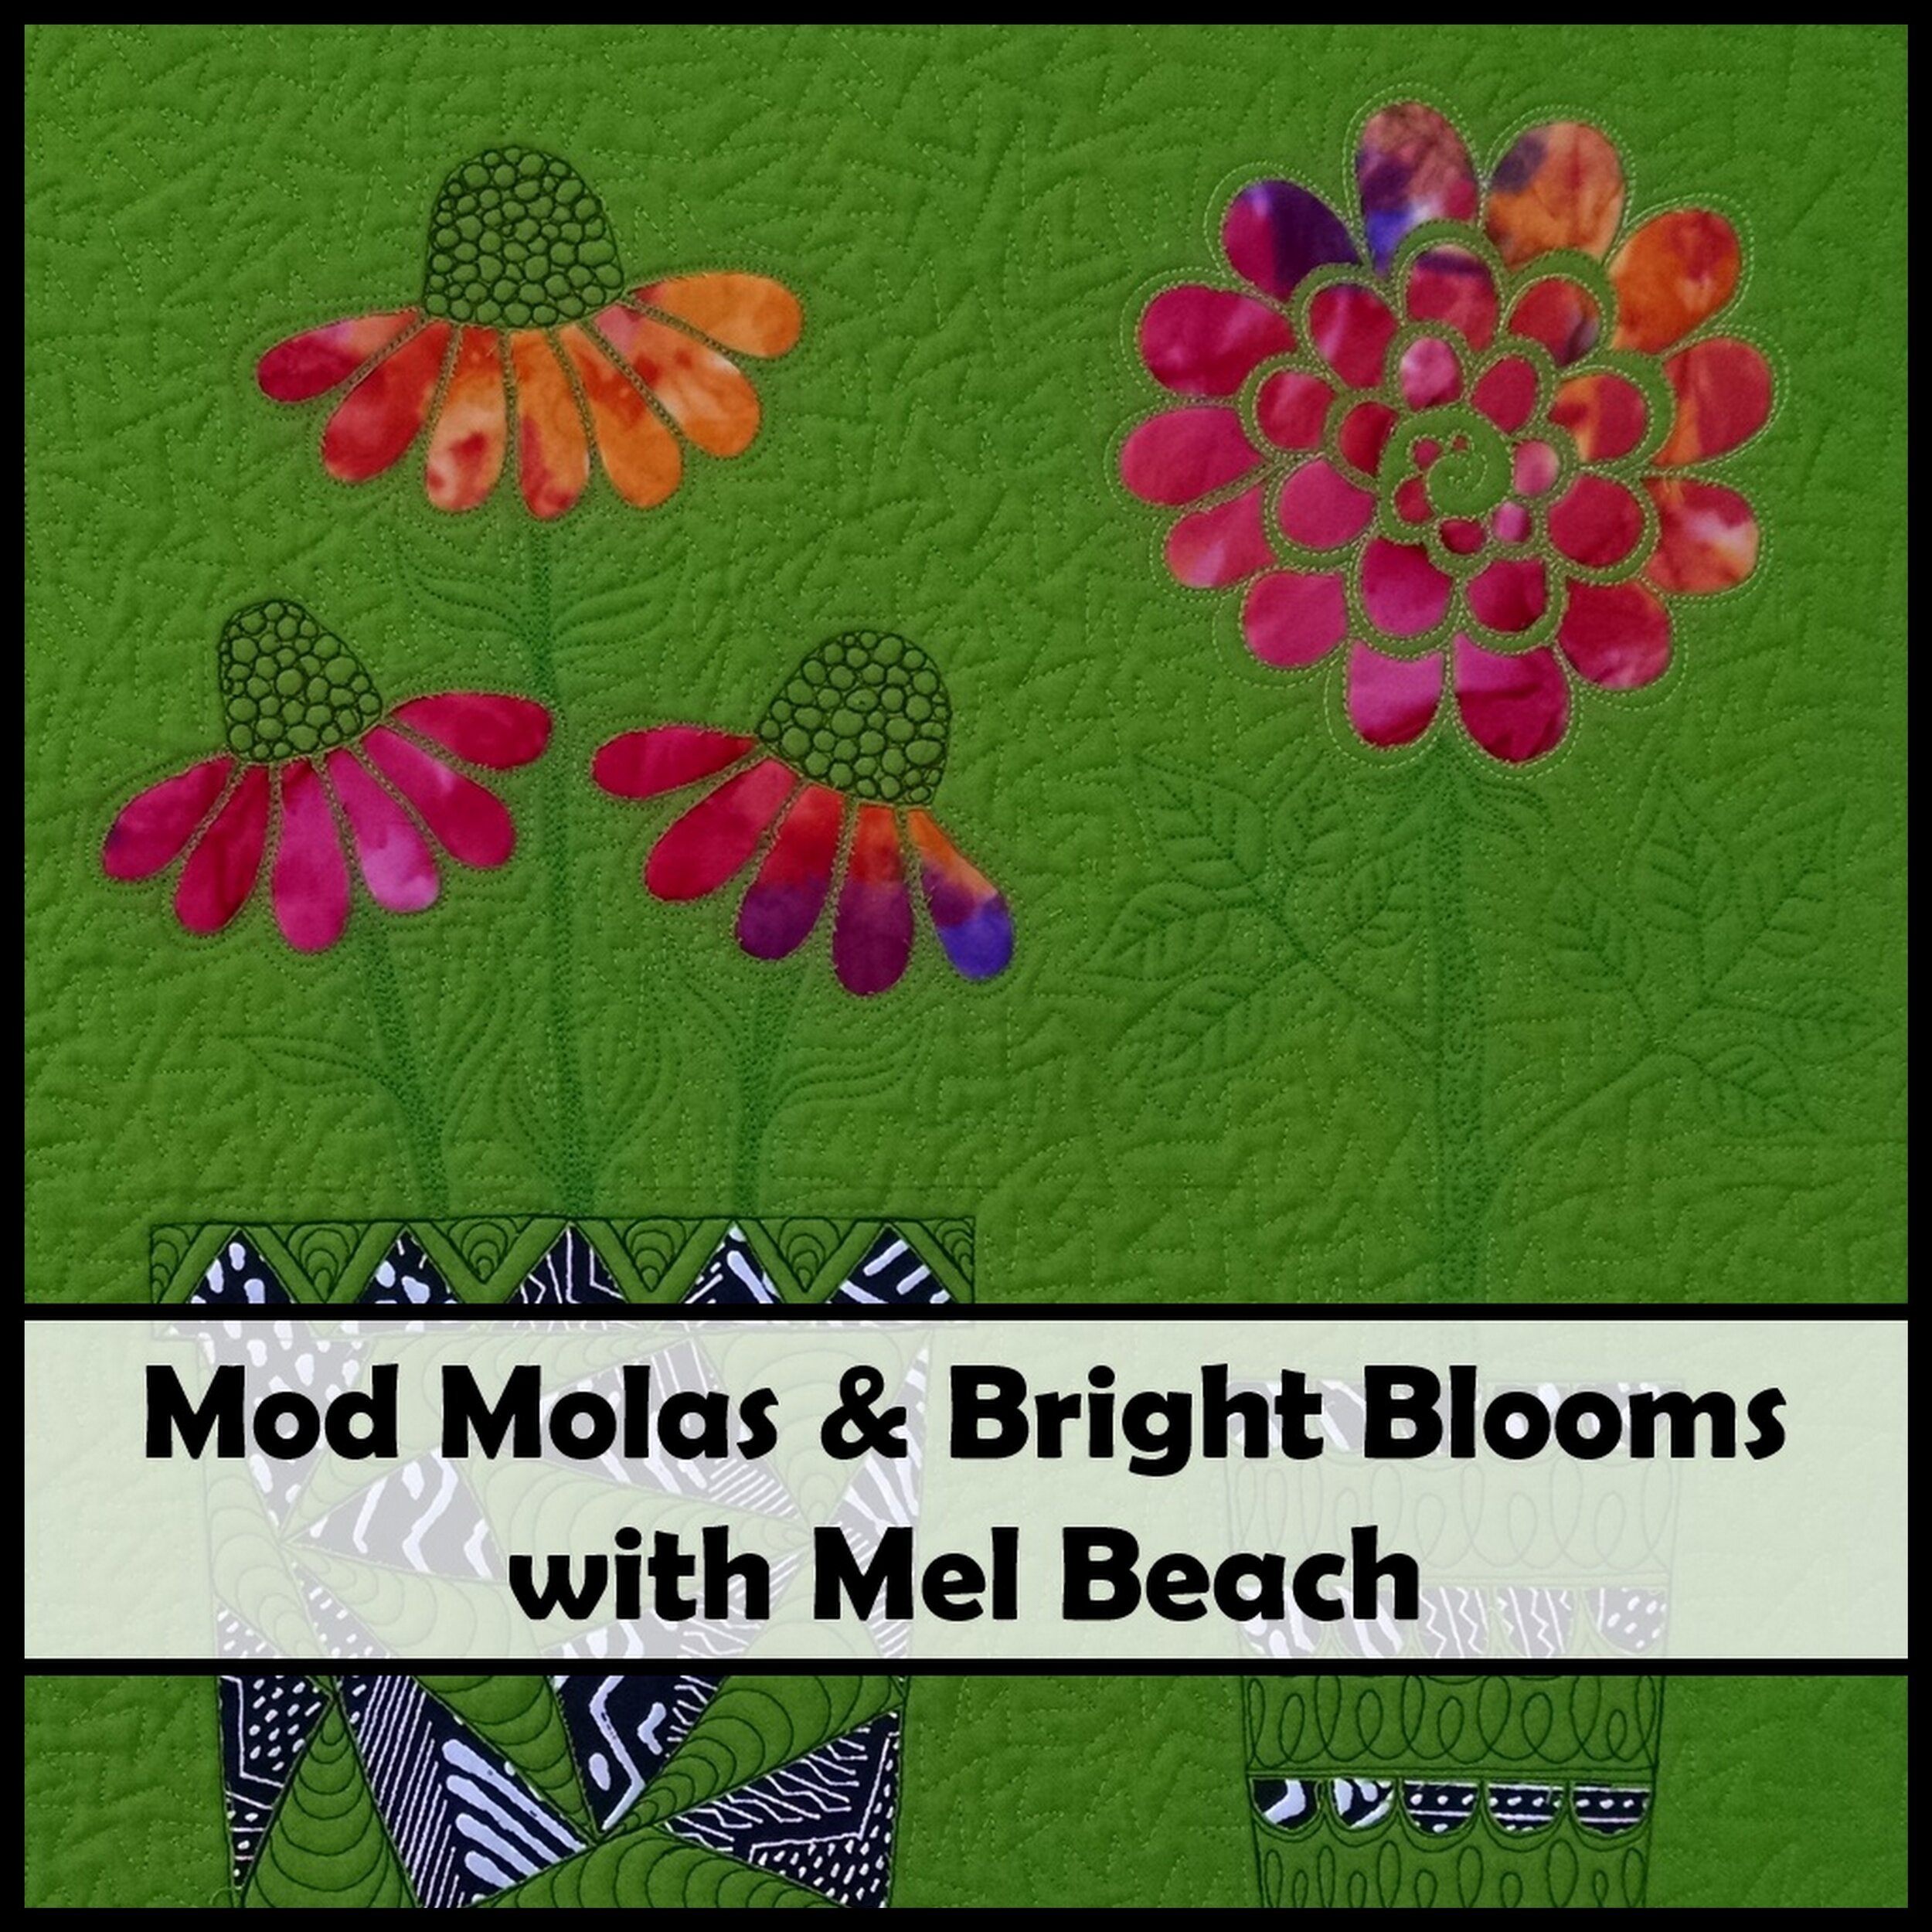 MBeach_Mod Molas and Bright Blooms.jpg